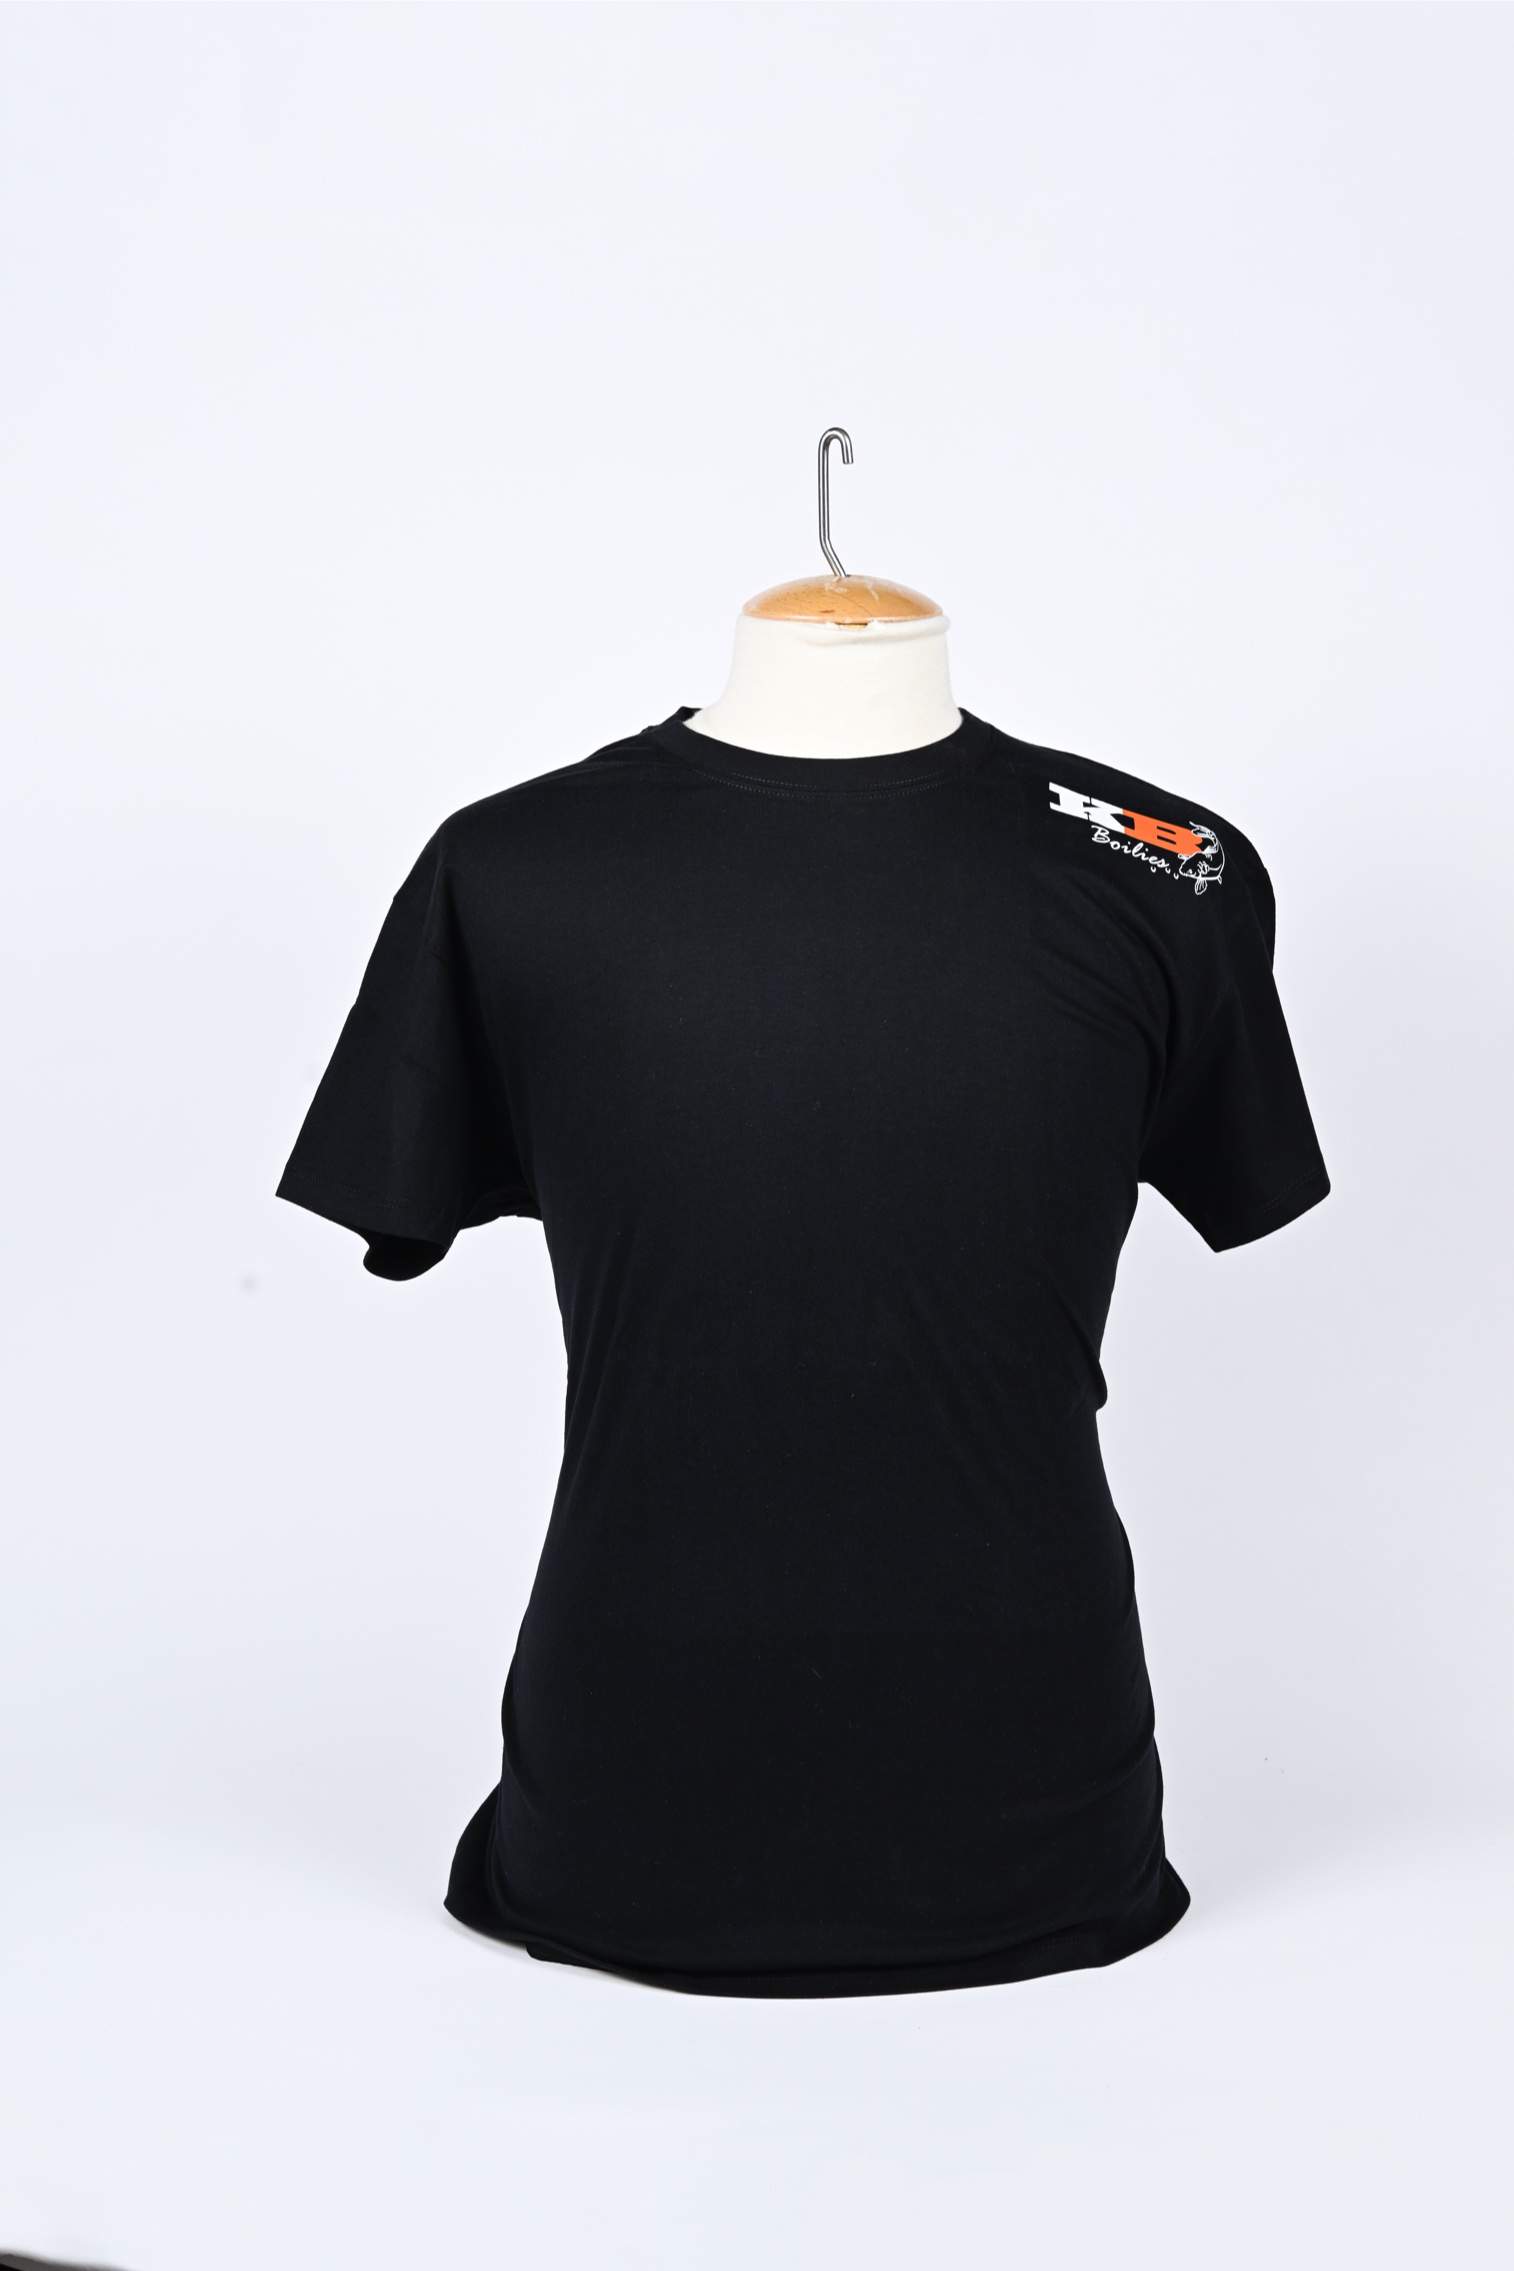 T-Shirt KB Black front